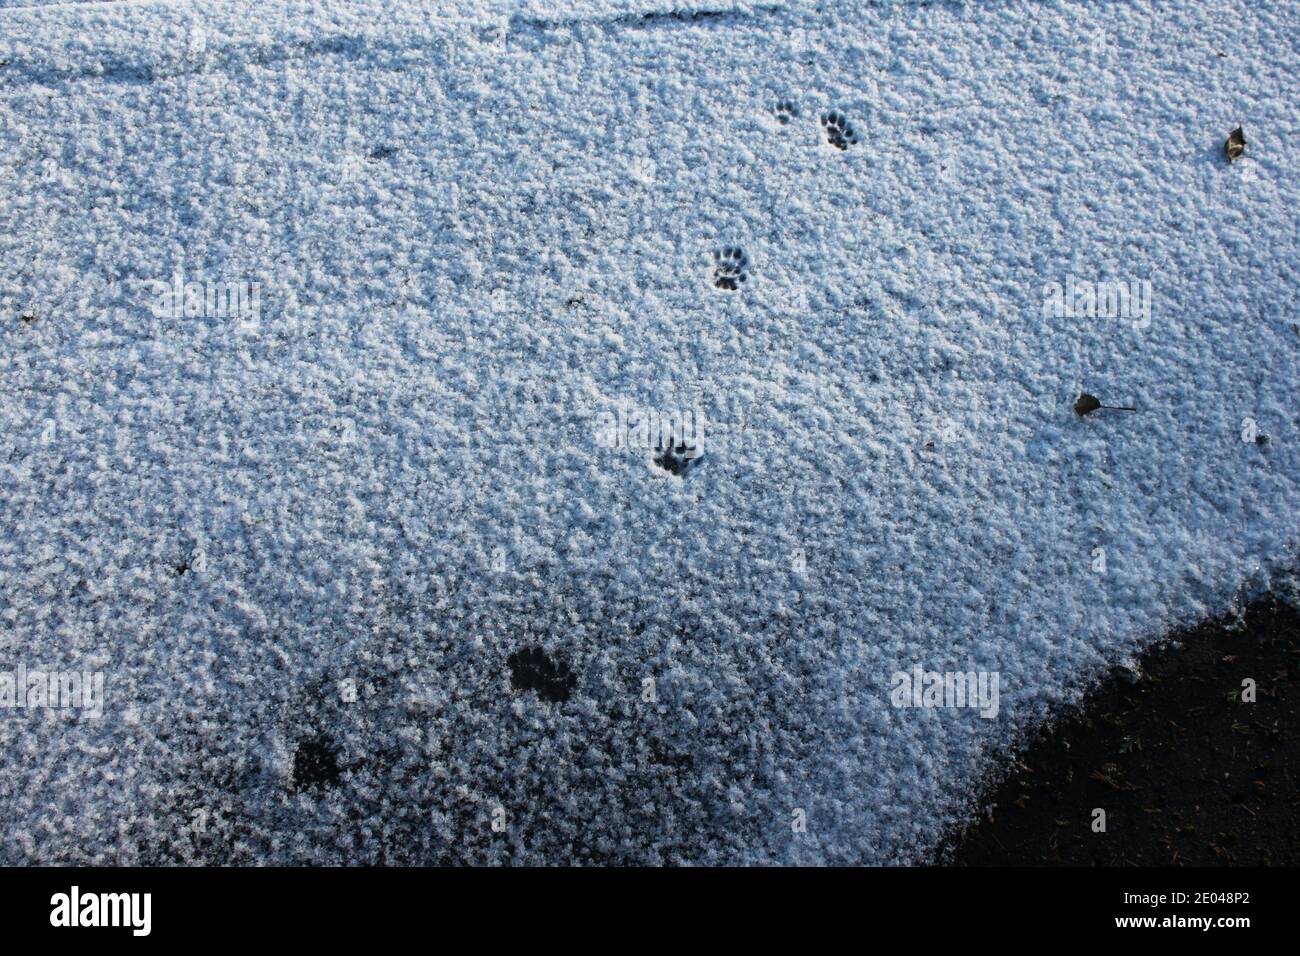 Random animal tracks imprinted in snow. Feline (cat) paw prints left in snow covered park. Winter parks, United Kingdom. Stock Photo